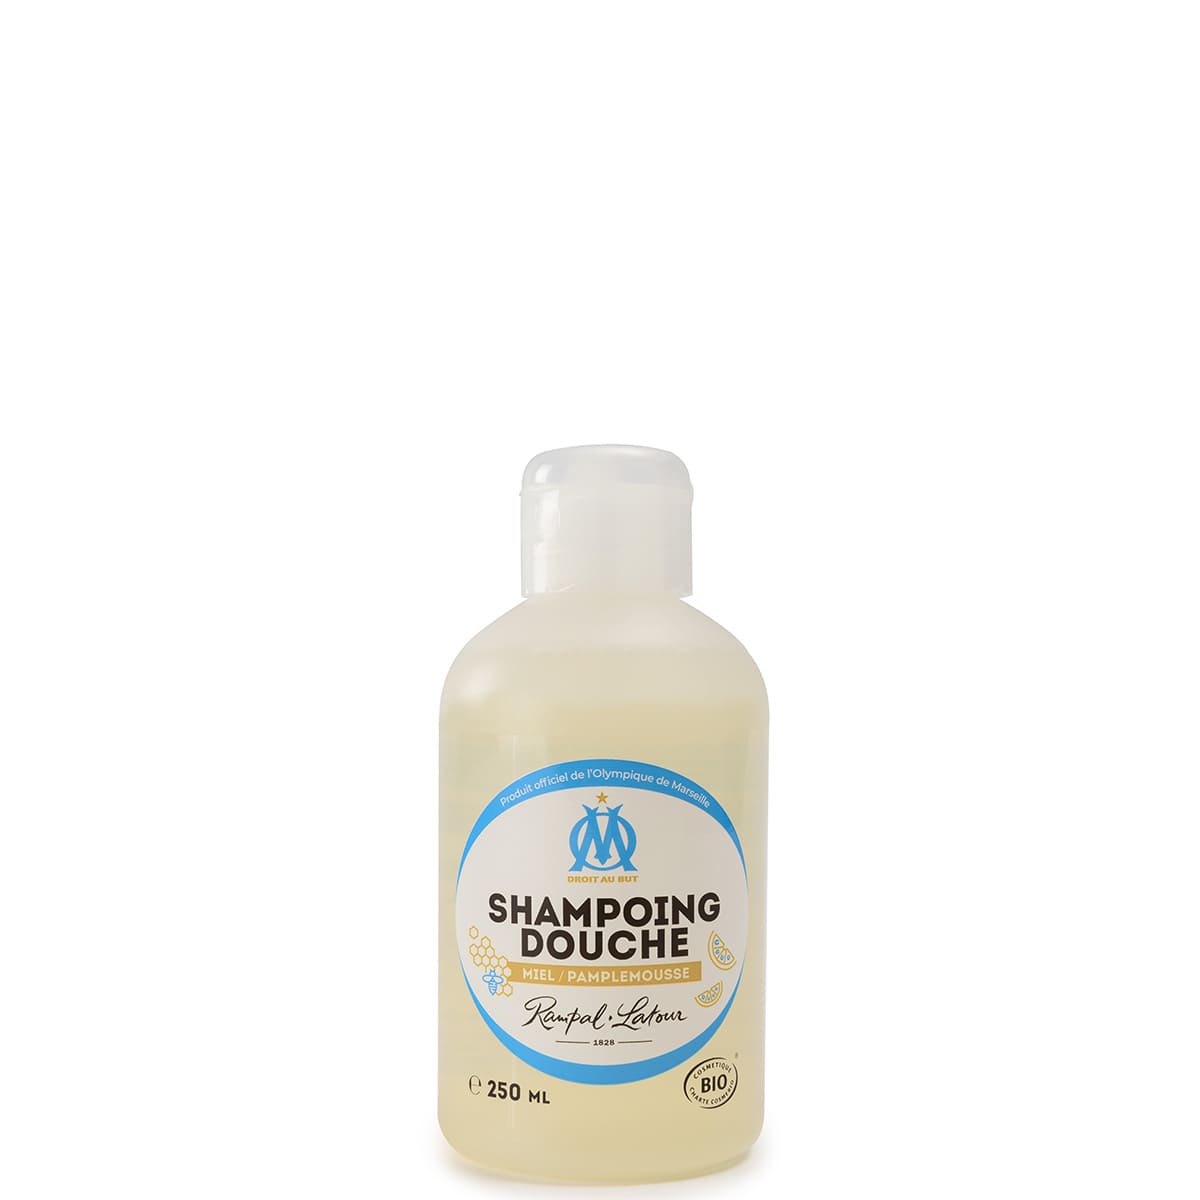 Shower shampoo certified organic Grapefruit 250ml - Olympique de Marseille - Ecocert Organic Cosmetics